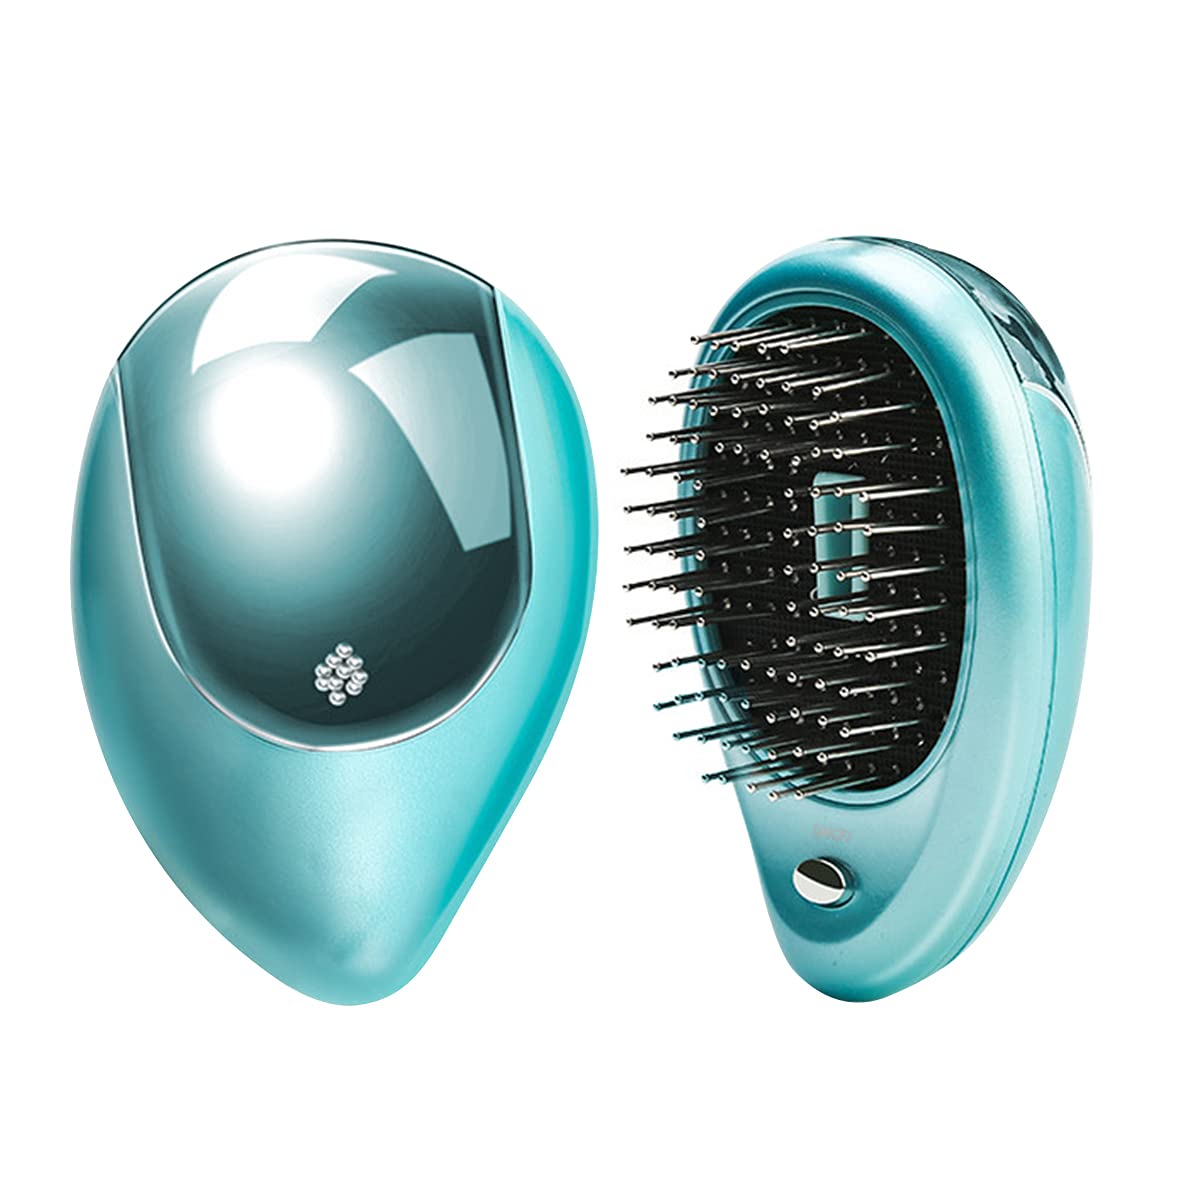 Portable Electric Ionic Hairbrush Anti- static Mini Hair Brush Massage Comb